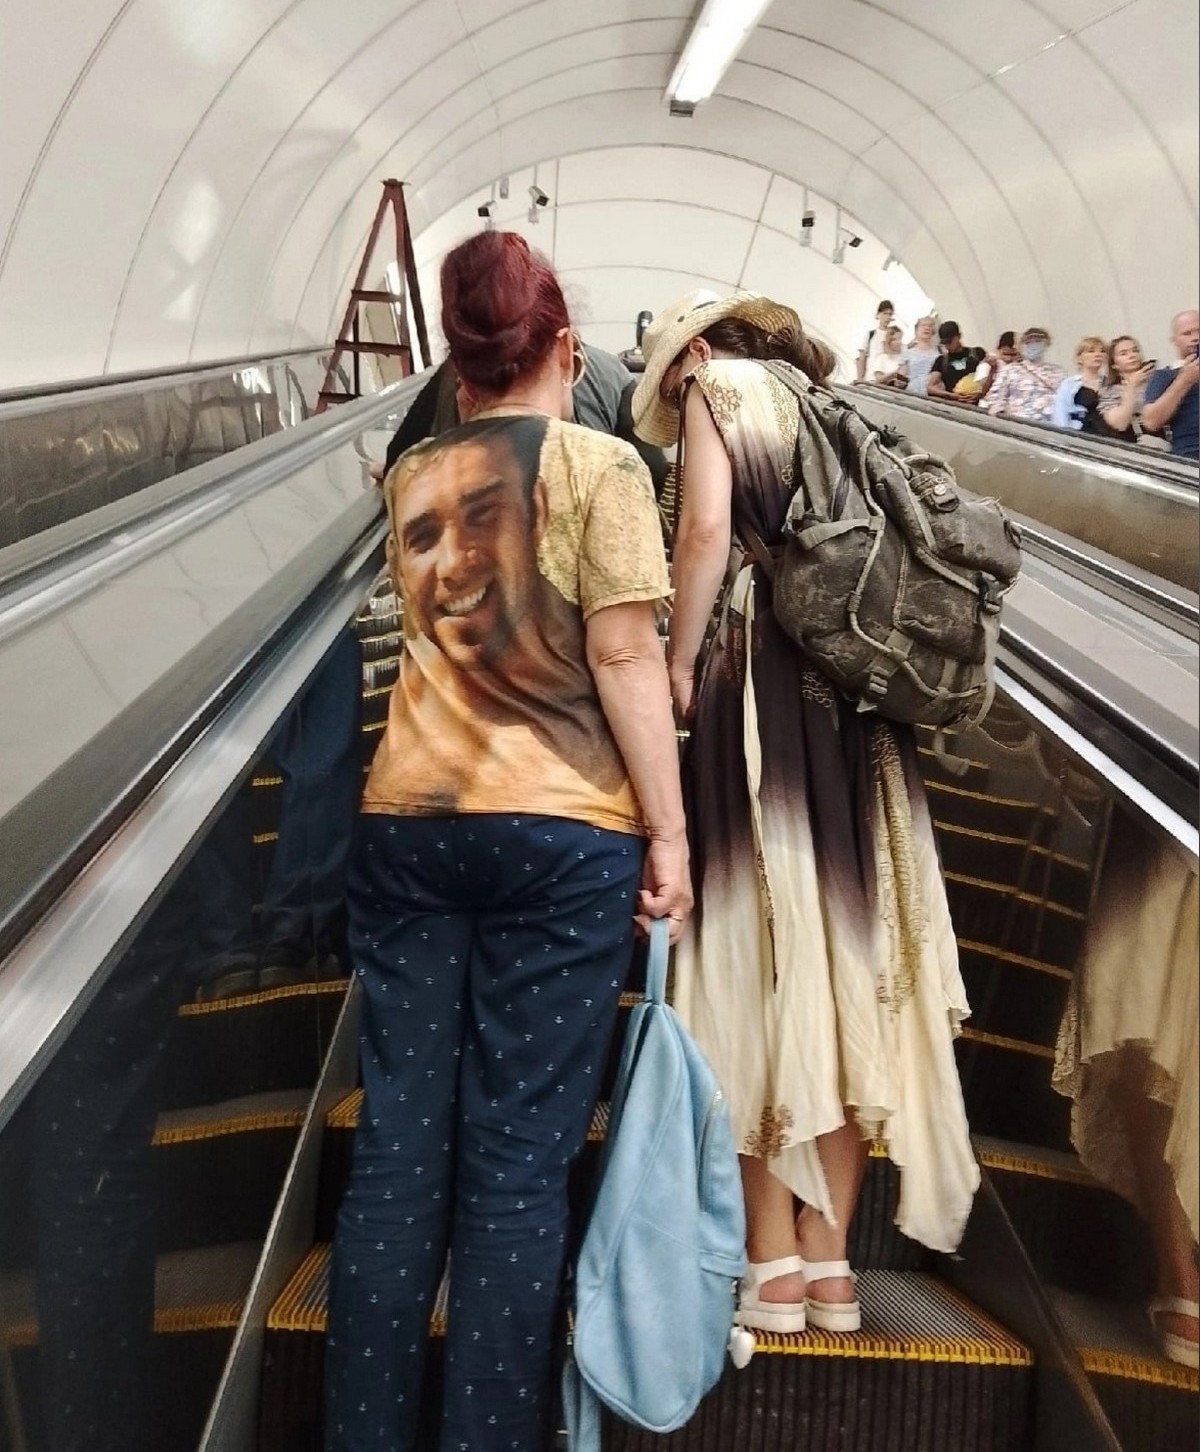 Strange People In The Subway (27 pics)